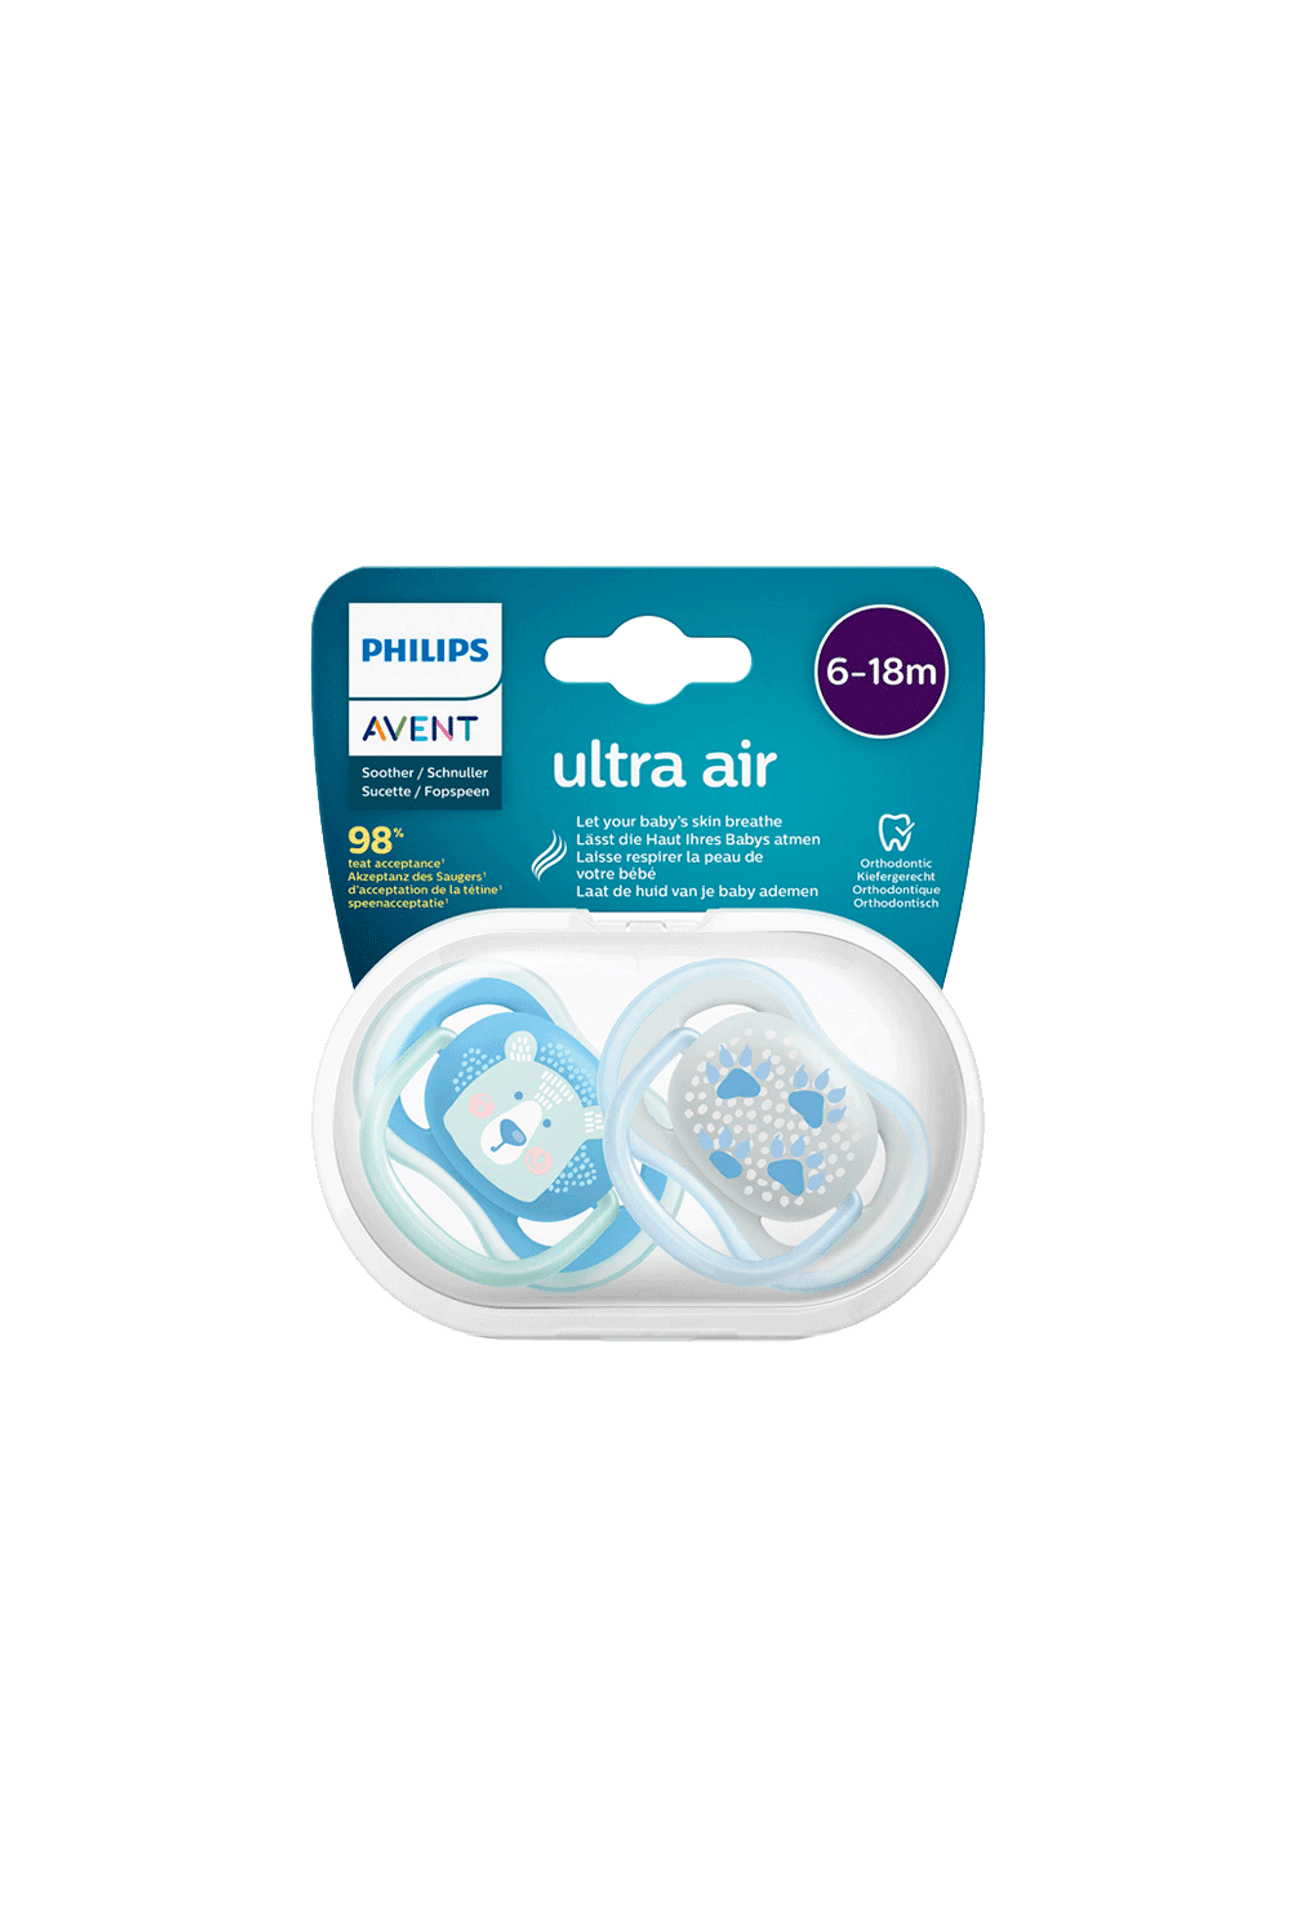 Philips Avent Ultra Air Night - Chupete para bebé de 6 a 18 meses